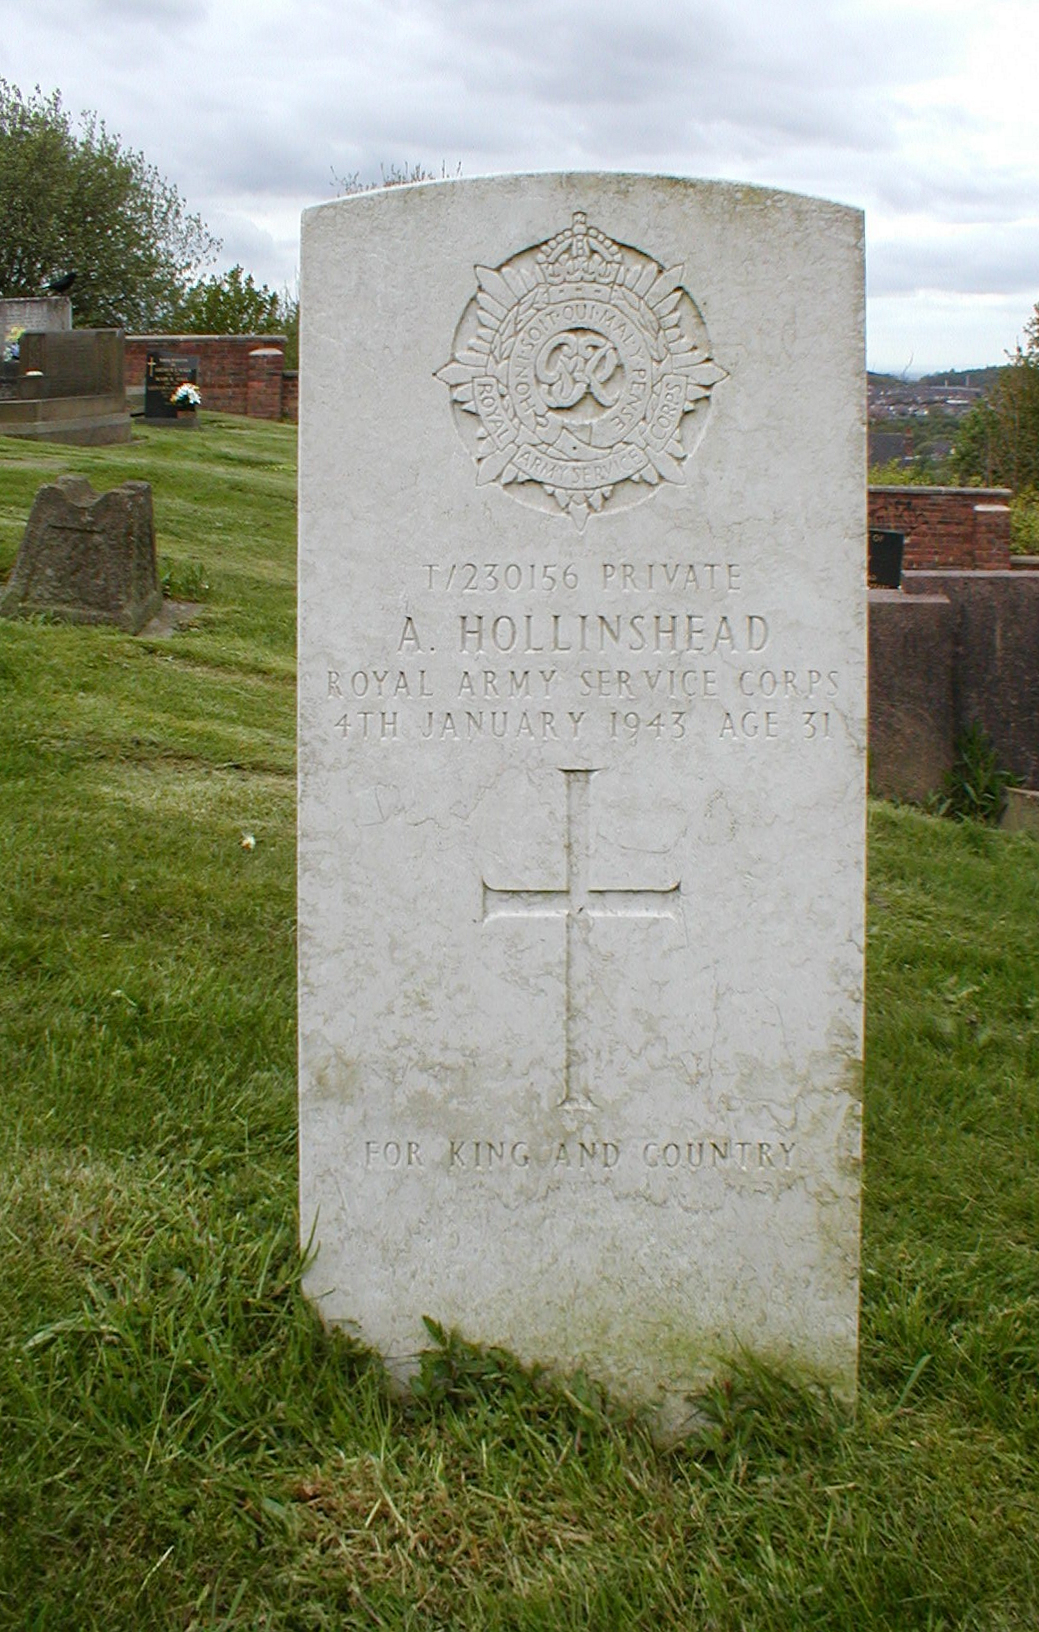 Arthur HOLLINSHEAD